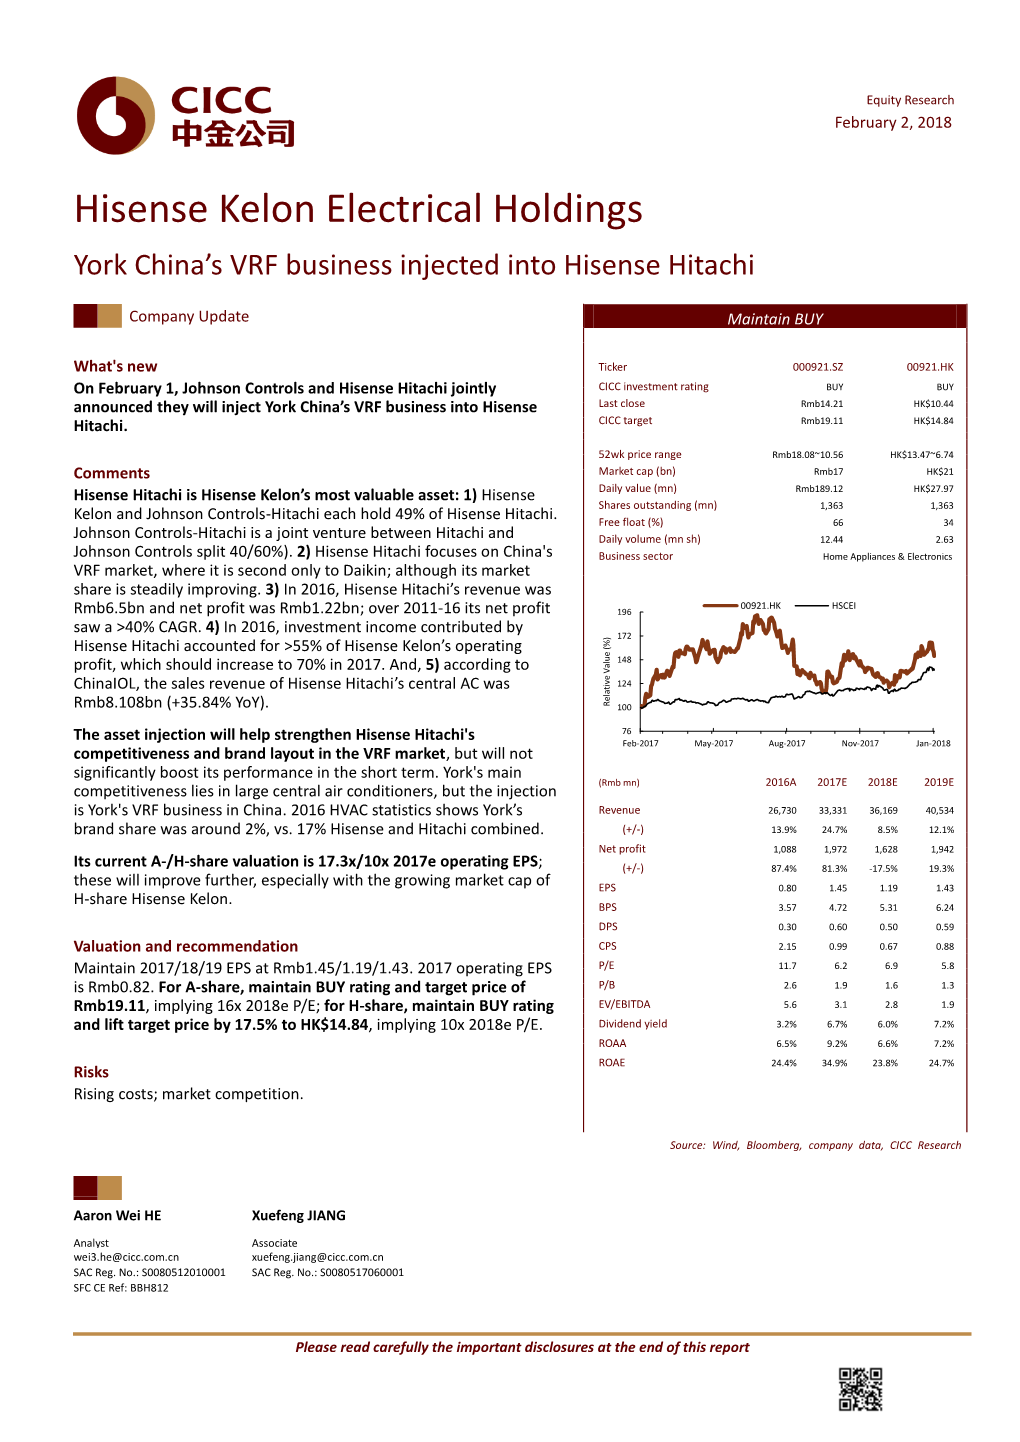 Hisense Kelon Electrical Holdings York China’S VRF Business Injected Into Hisense Hitachi